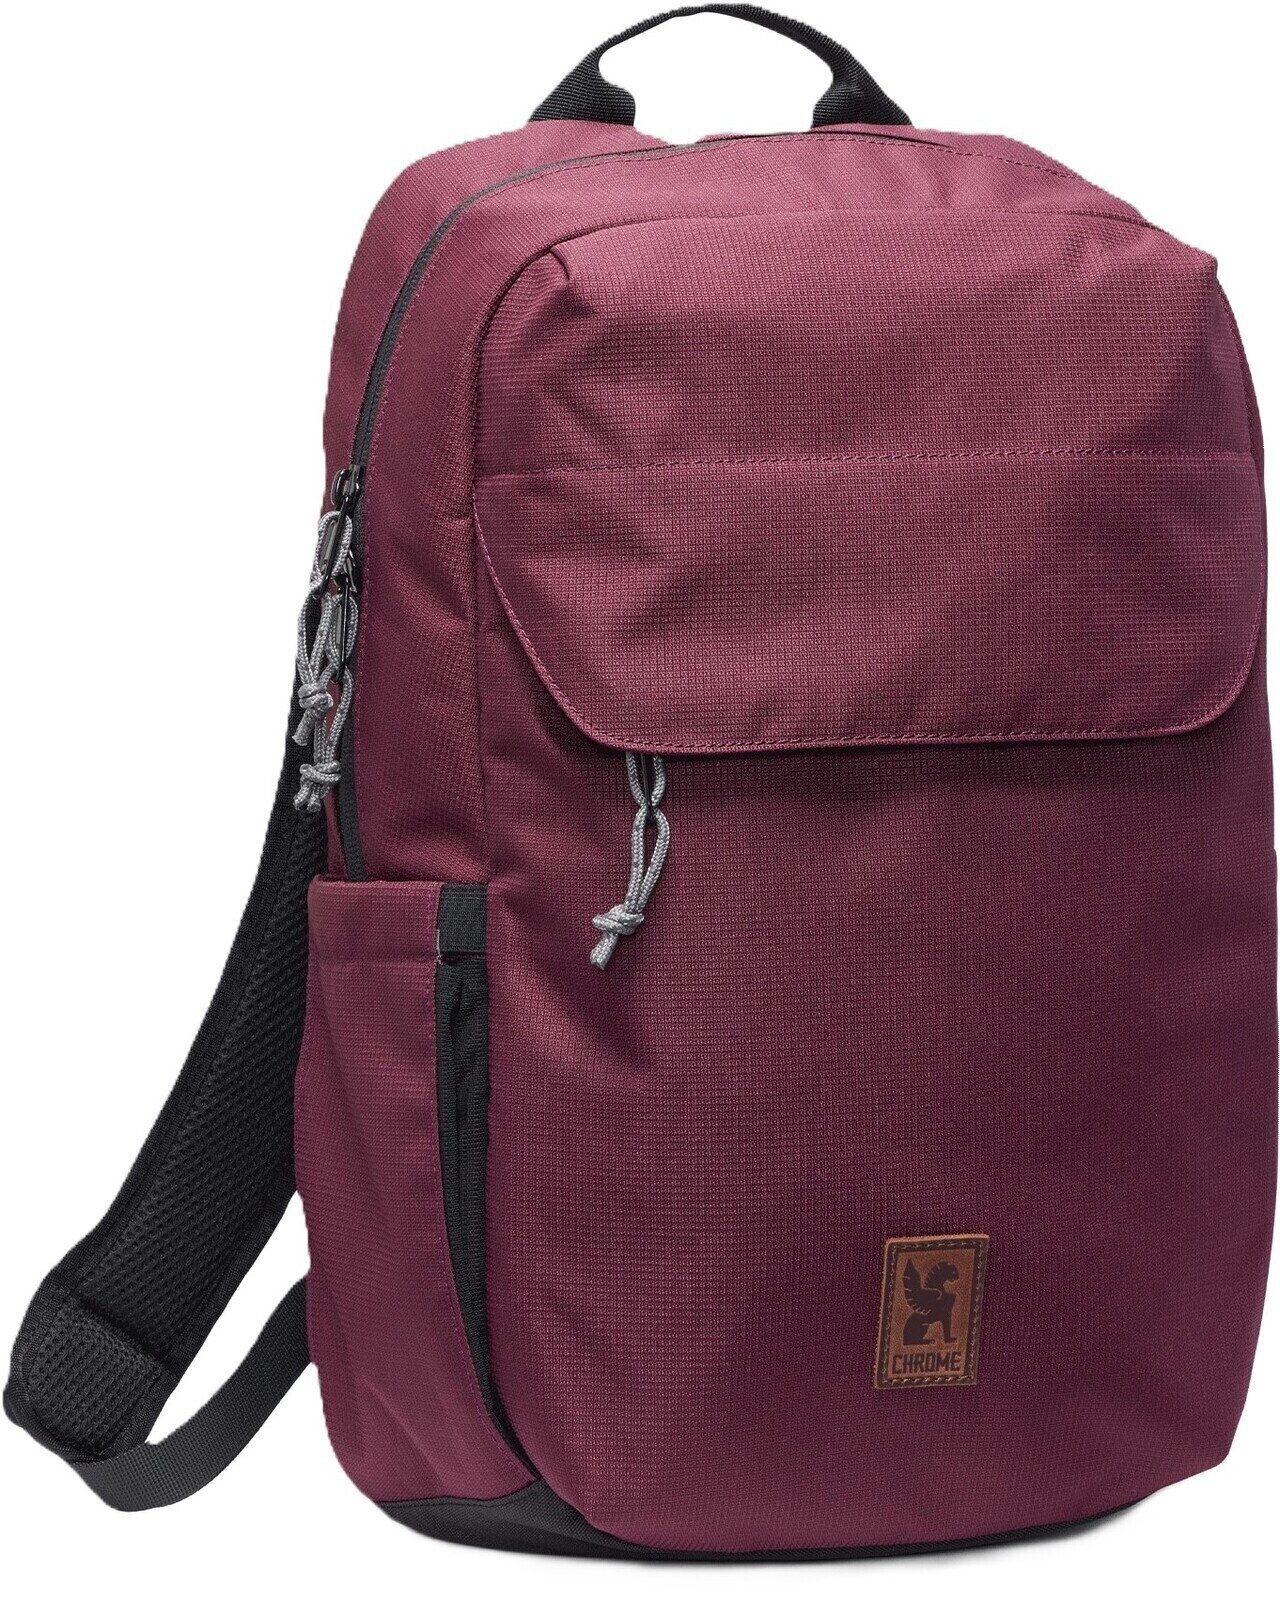 Lifestyle Rucksäck / Tasche Chrome Ruckas Backpack Royale 14 L Rucksack